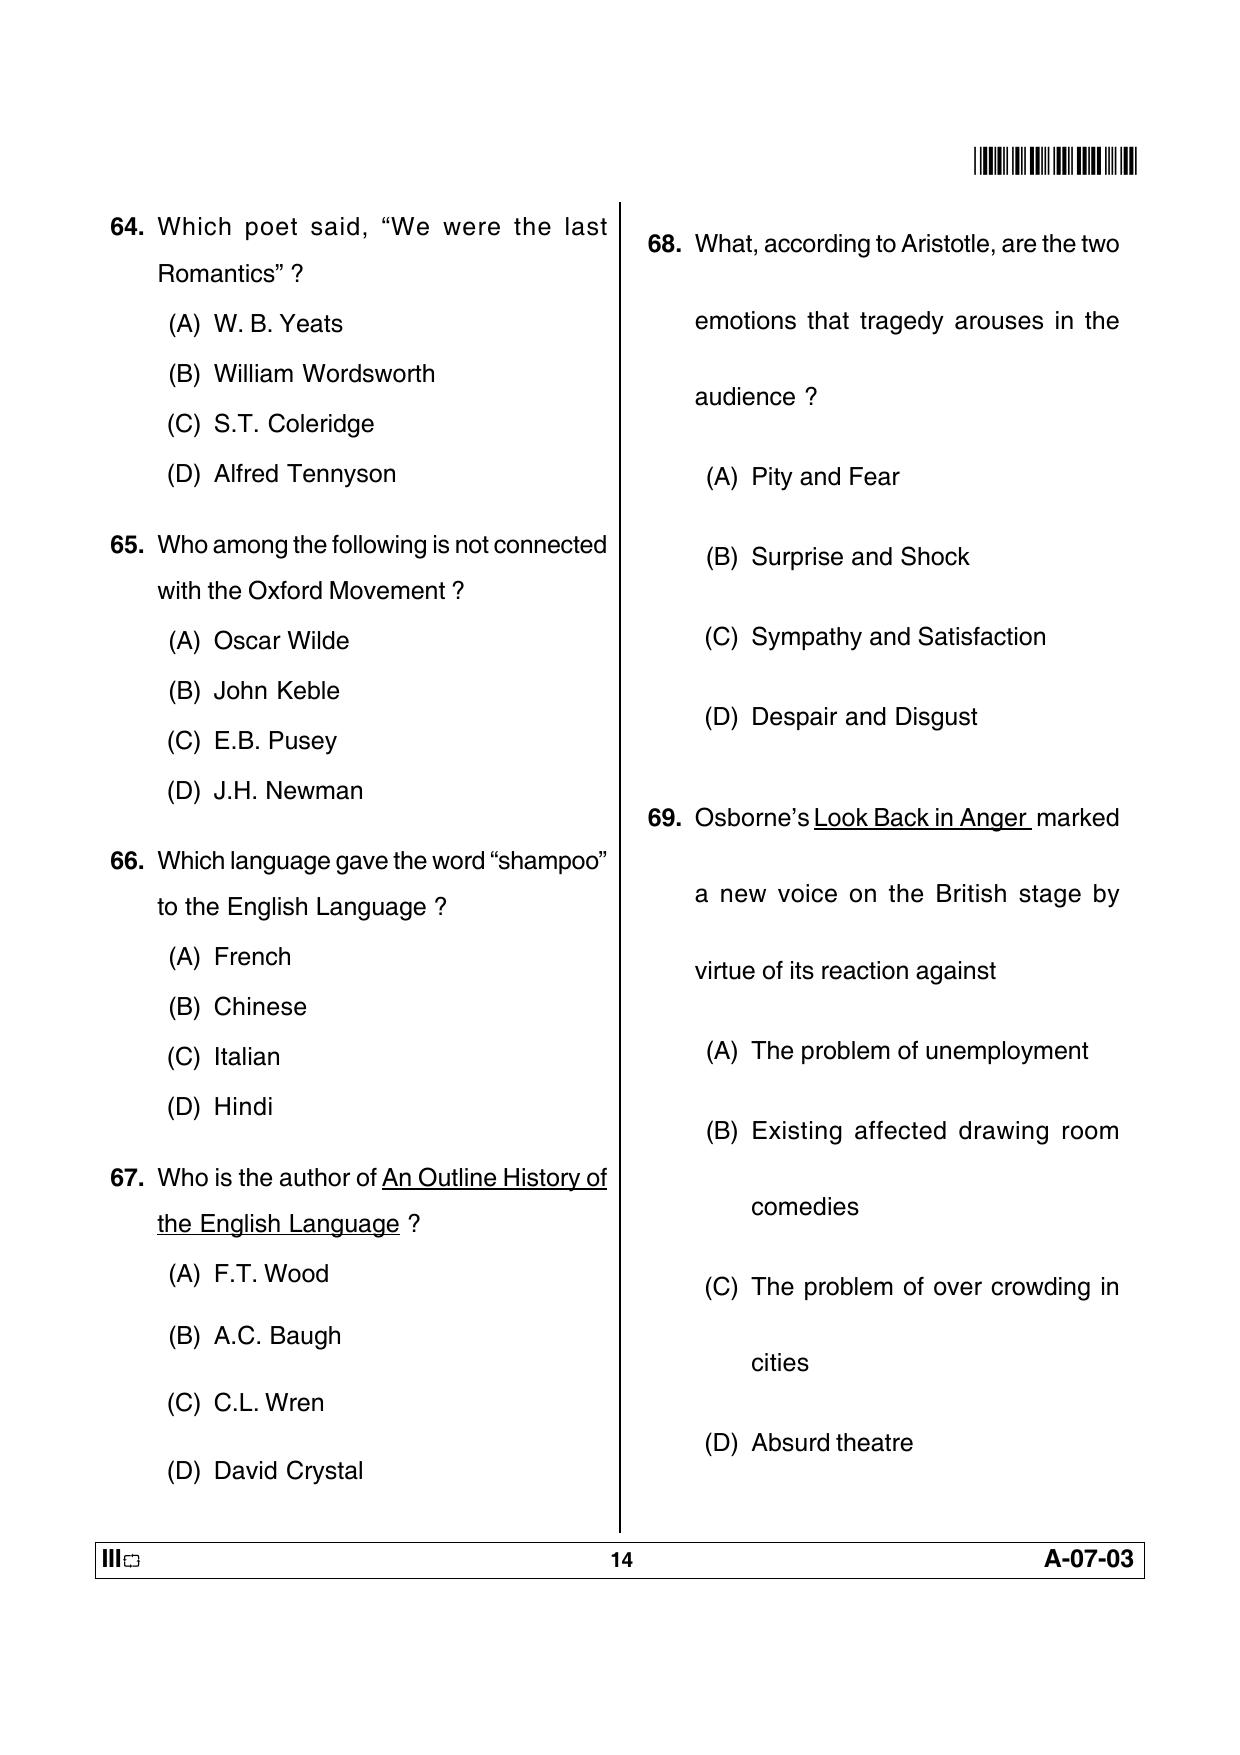 APSET English Previous Paper PDF - Page 14